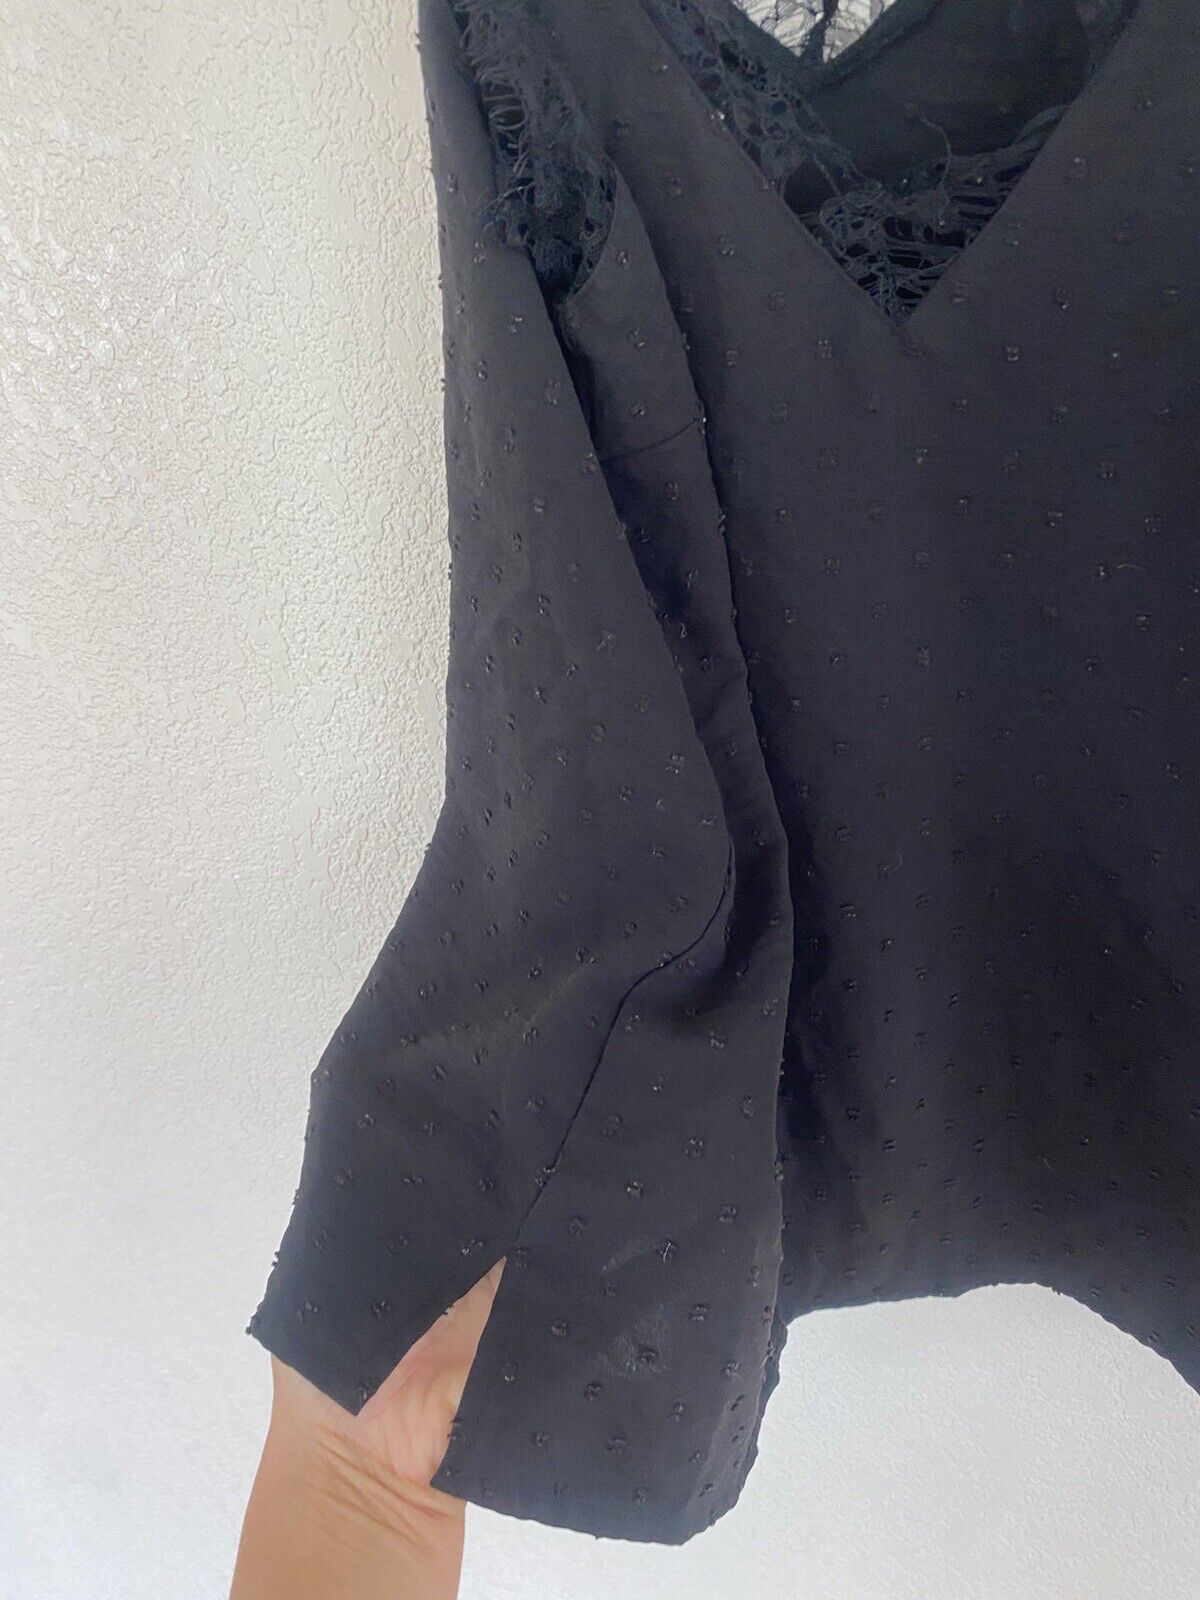 Black Lace Camisole - Unbranded - Size Large